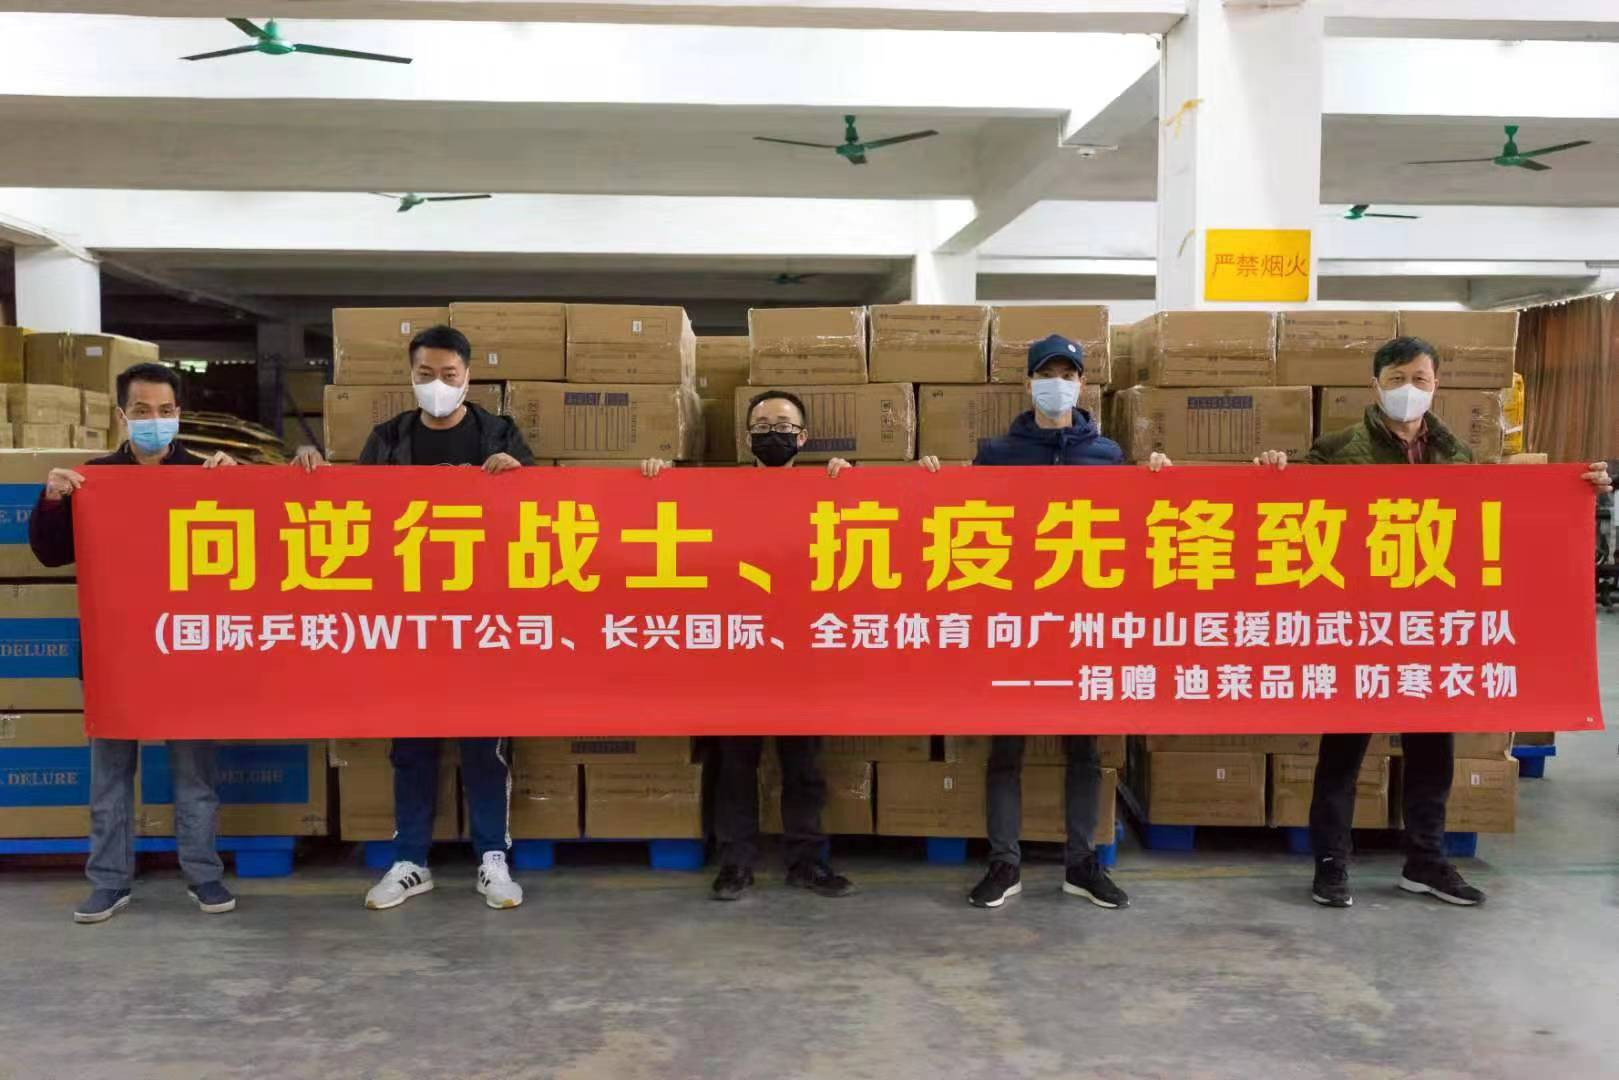 ITTF supply masks and warm clothing to Wuhan to help coronavirus battle